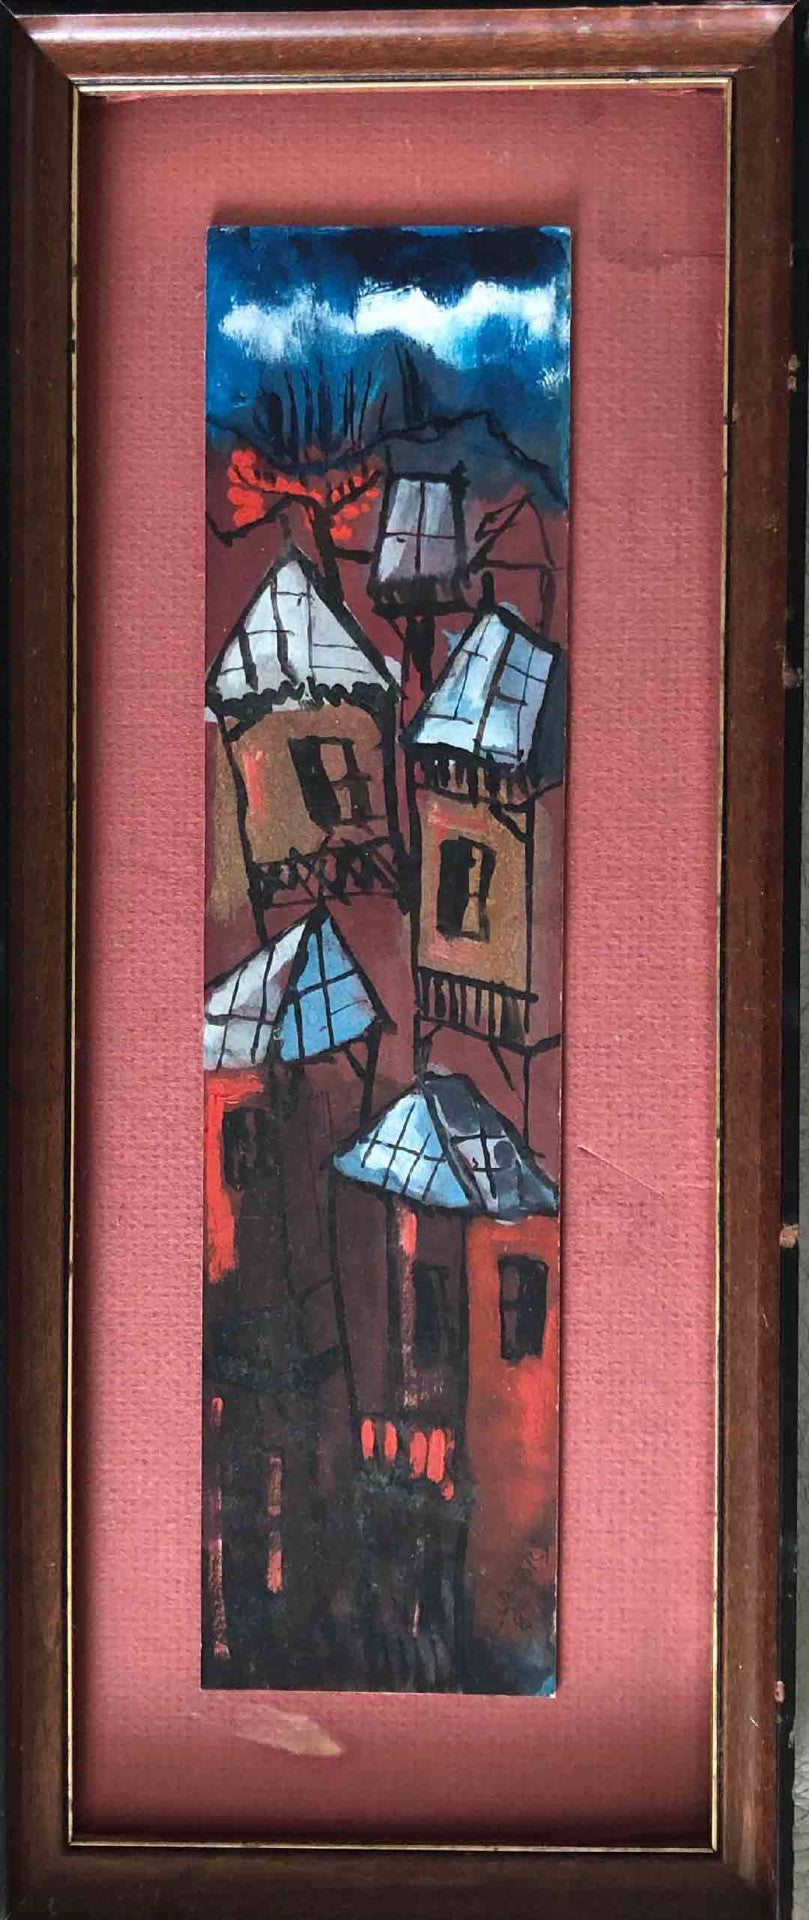 Luckner Lazard (Haitian, 1928-1998) "Village/Houses" 1989 Framed Watercolor on Paper 14.5"h x 5.5"w #73-3-96GSN-NY